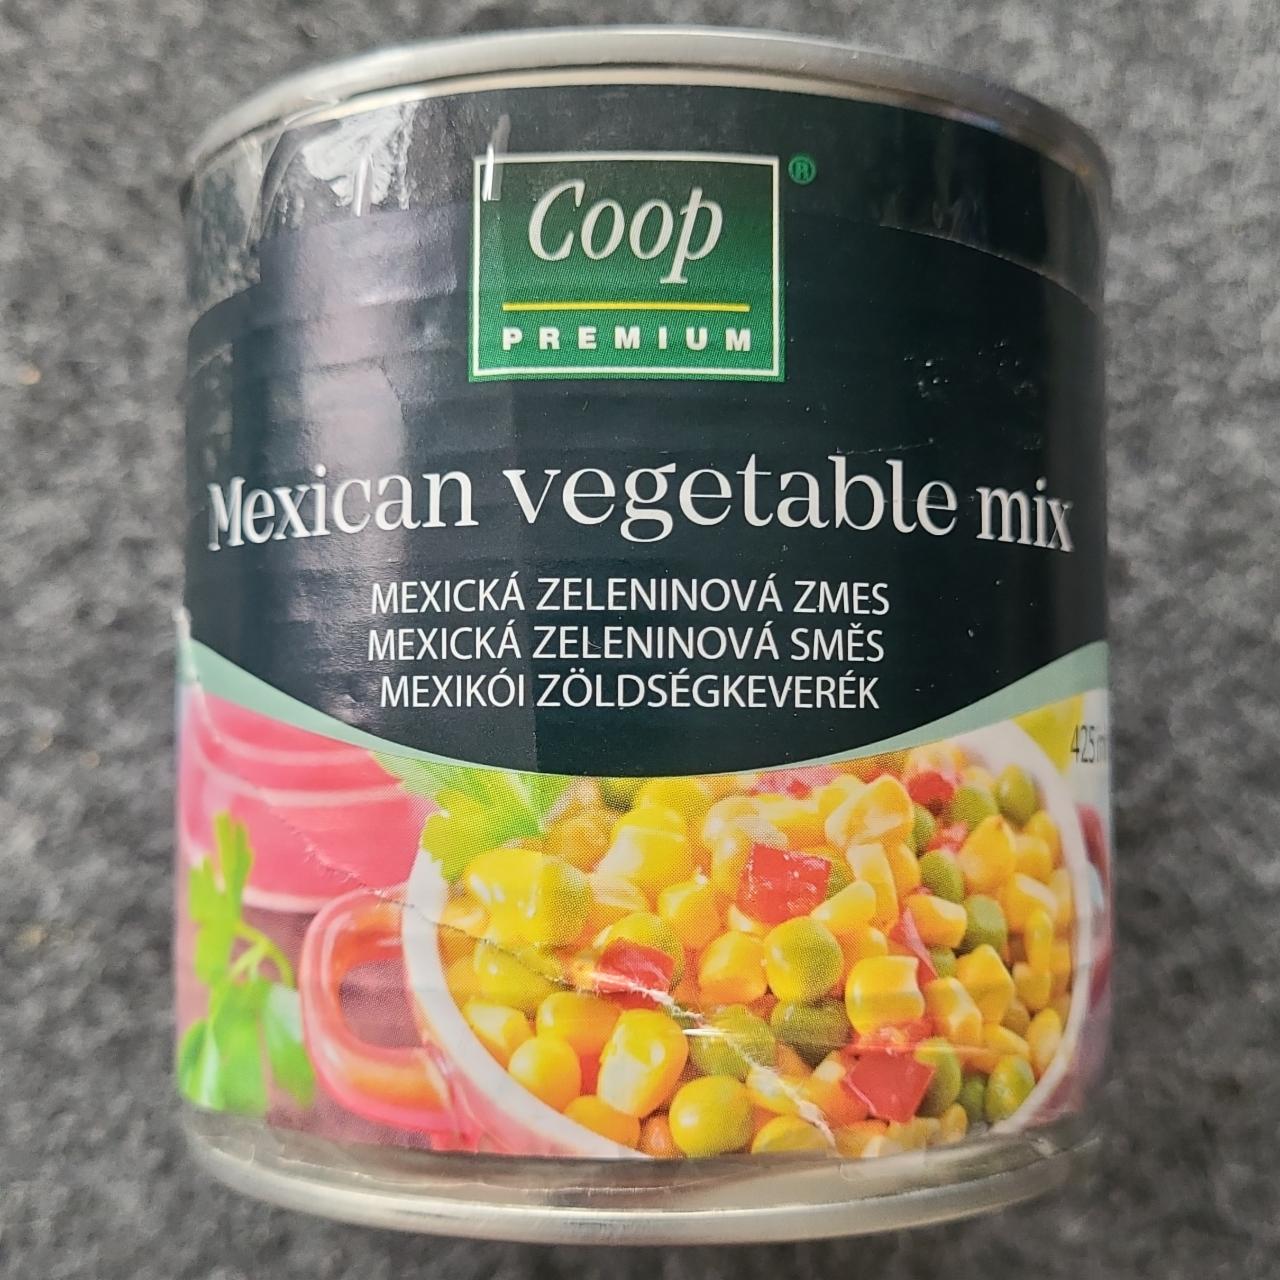 Képek - Mexican vegetable mix Coop Premium